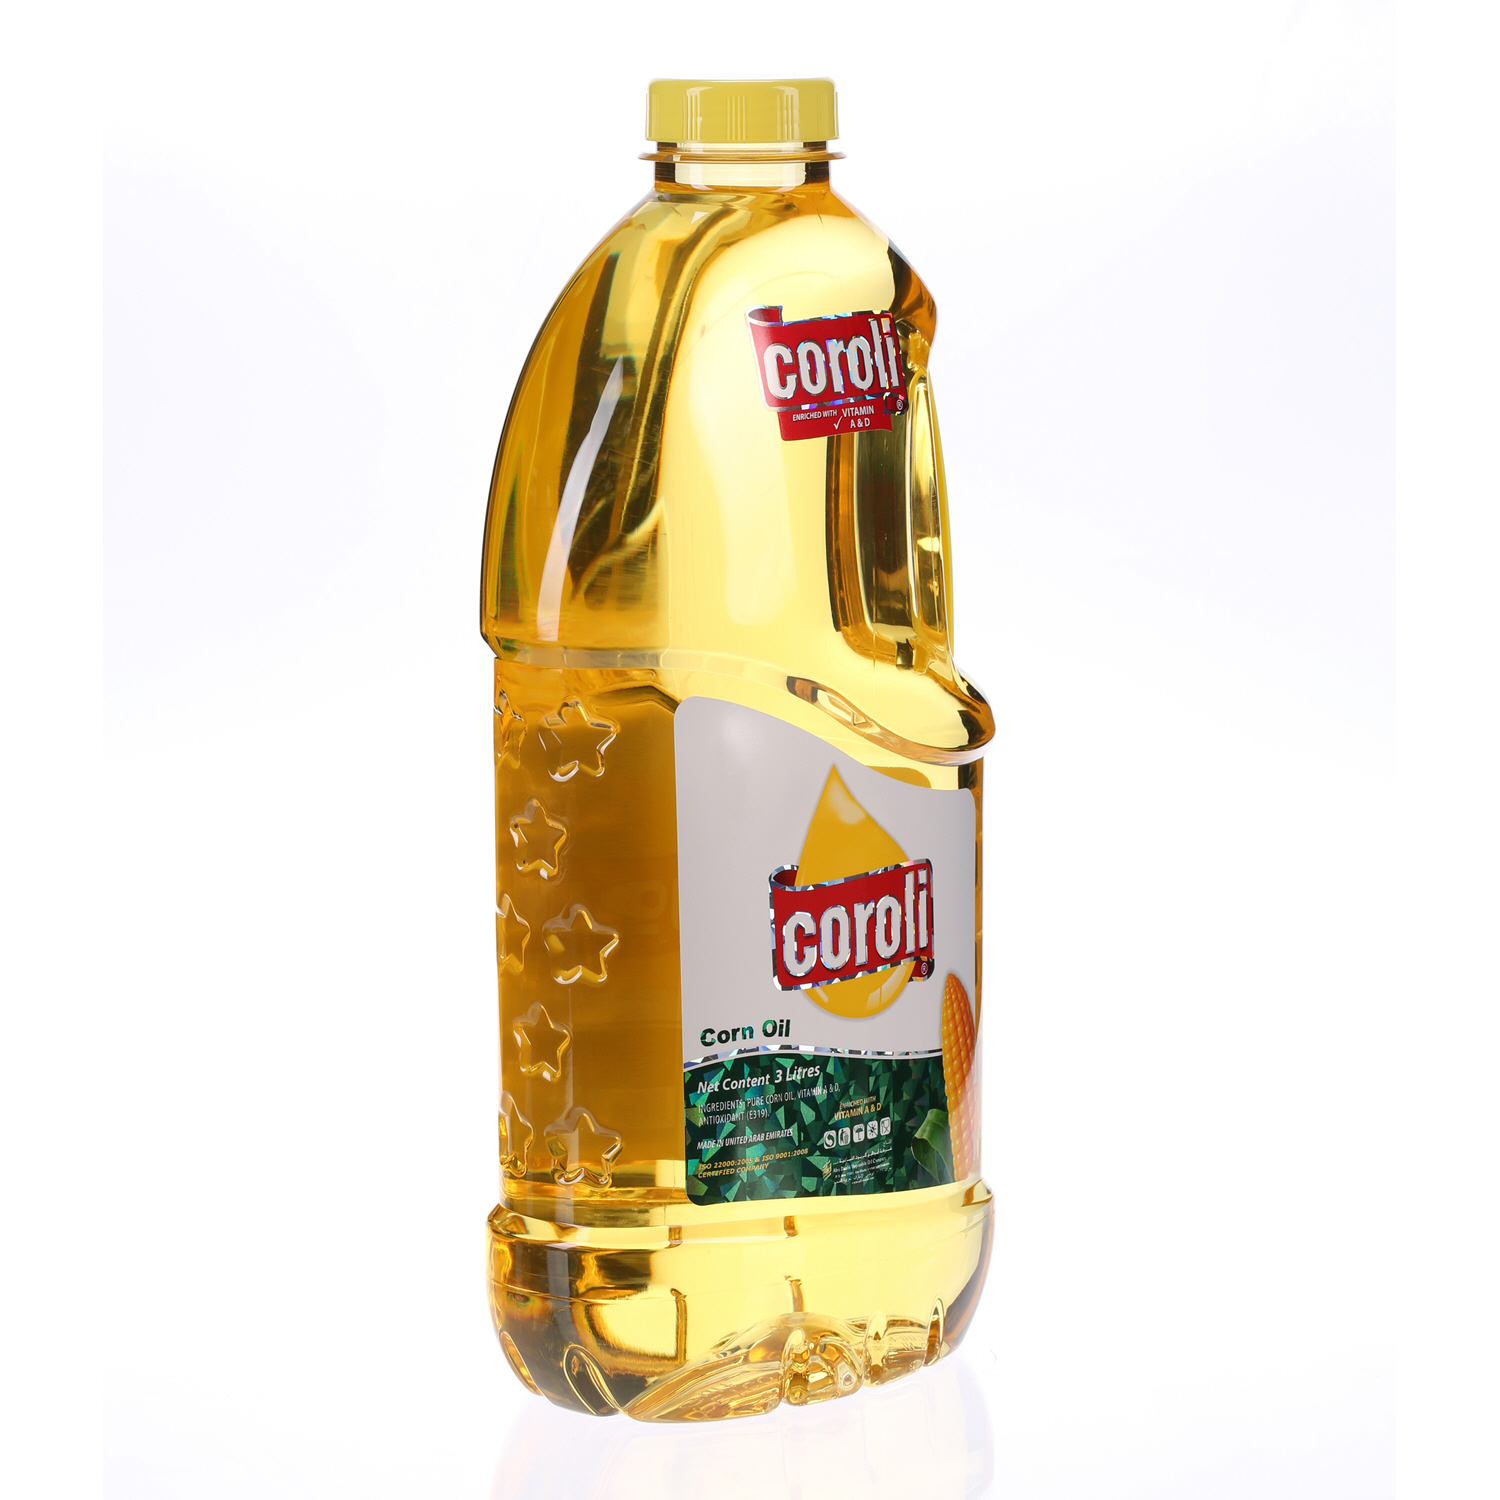 Coroli Corn Oil Plastic Bottle With Handle 3.45 L